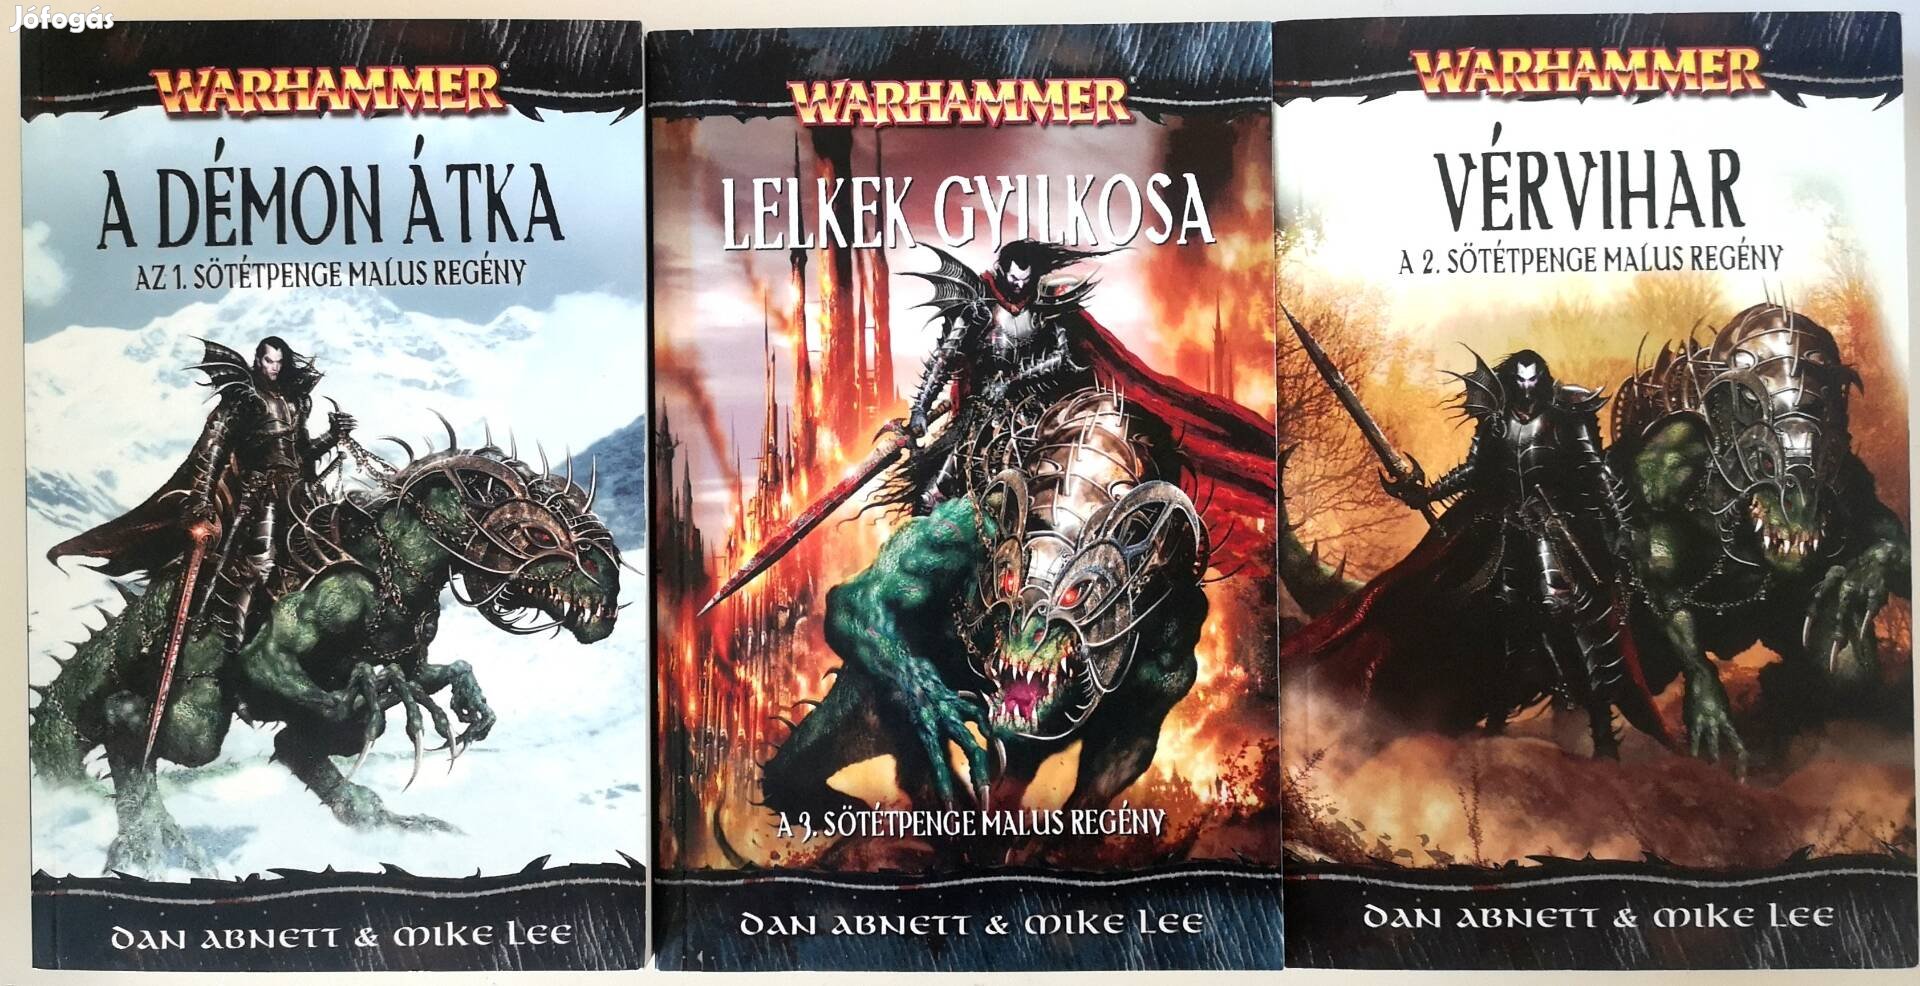 Warhammer Sötétpenge Malus könyvek